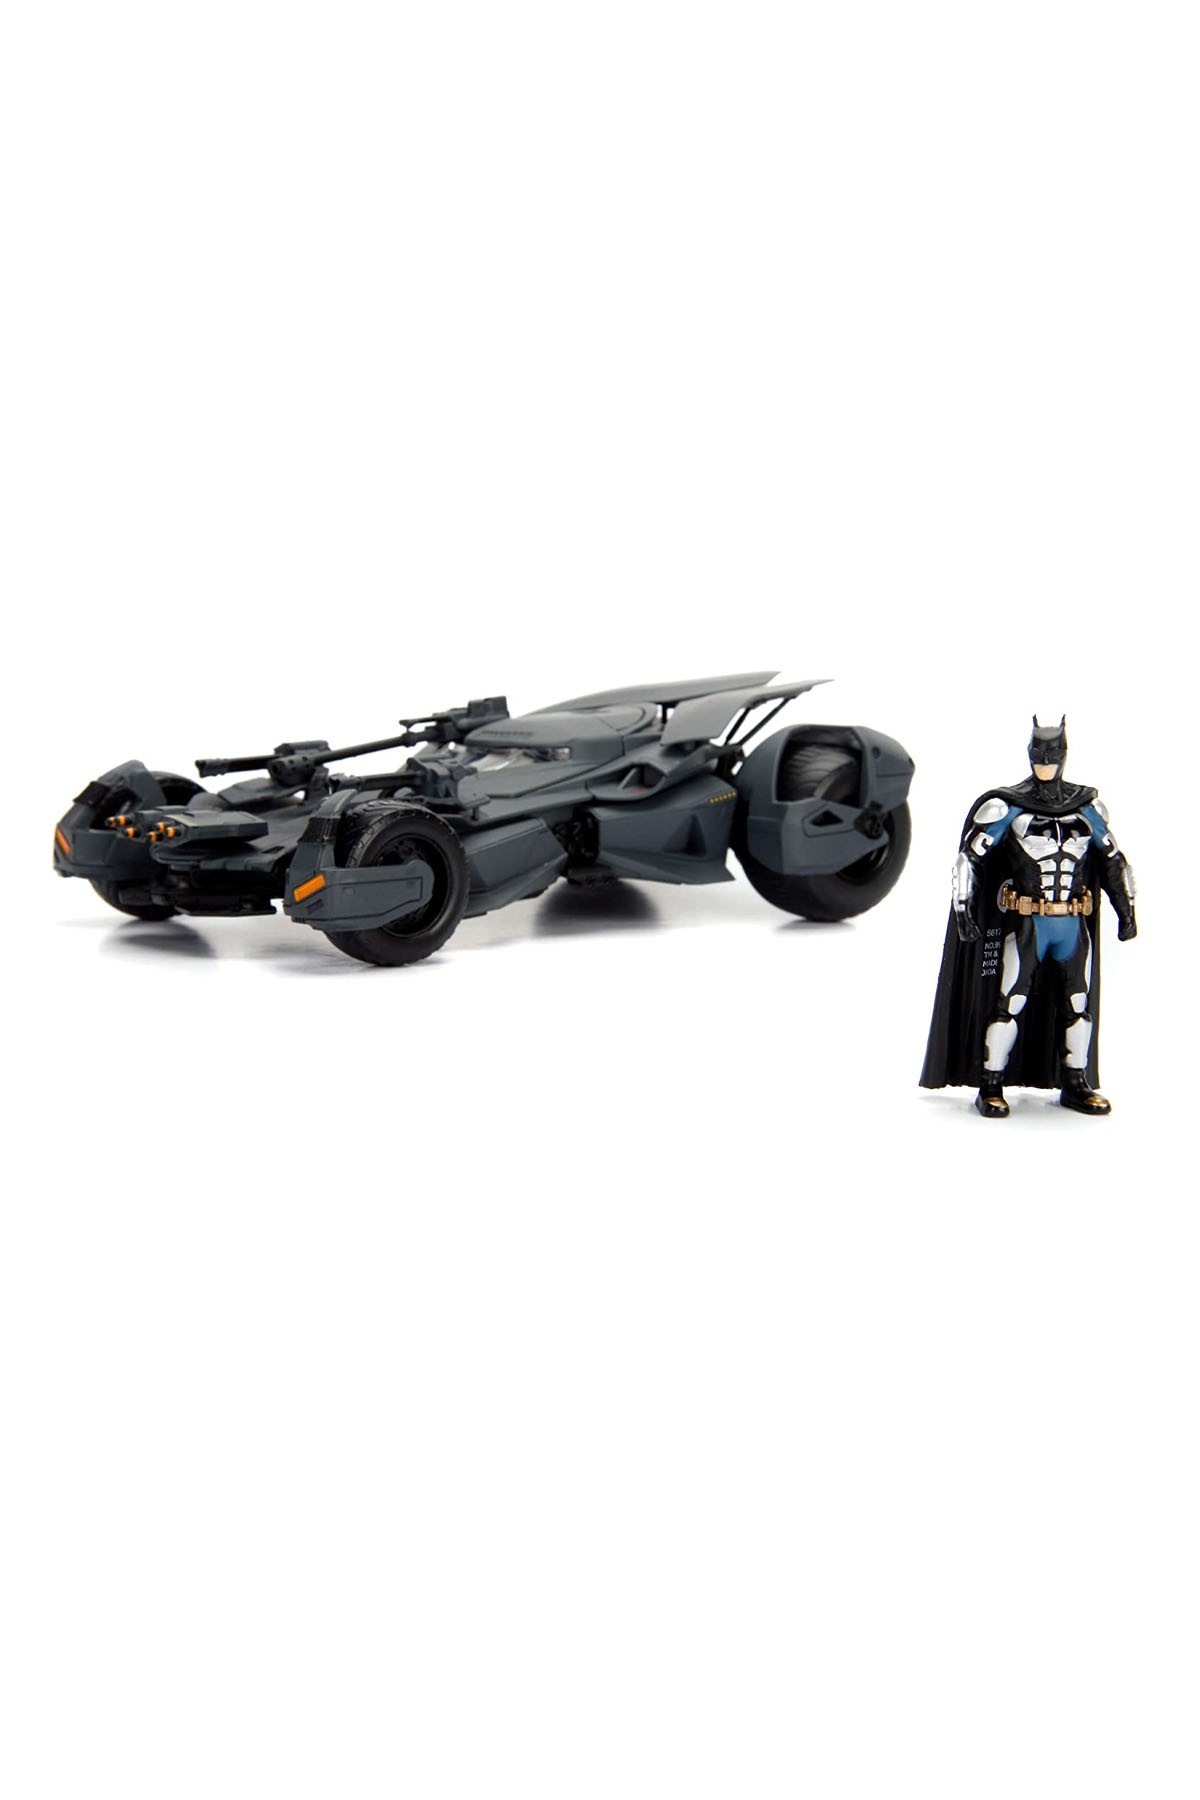 Jada Batman Justice League Batmobile 1:24